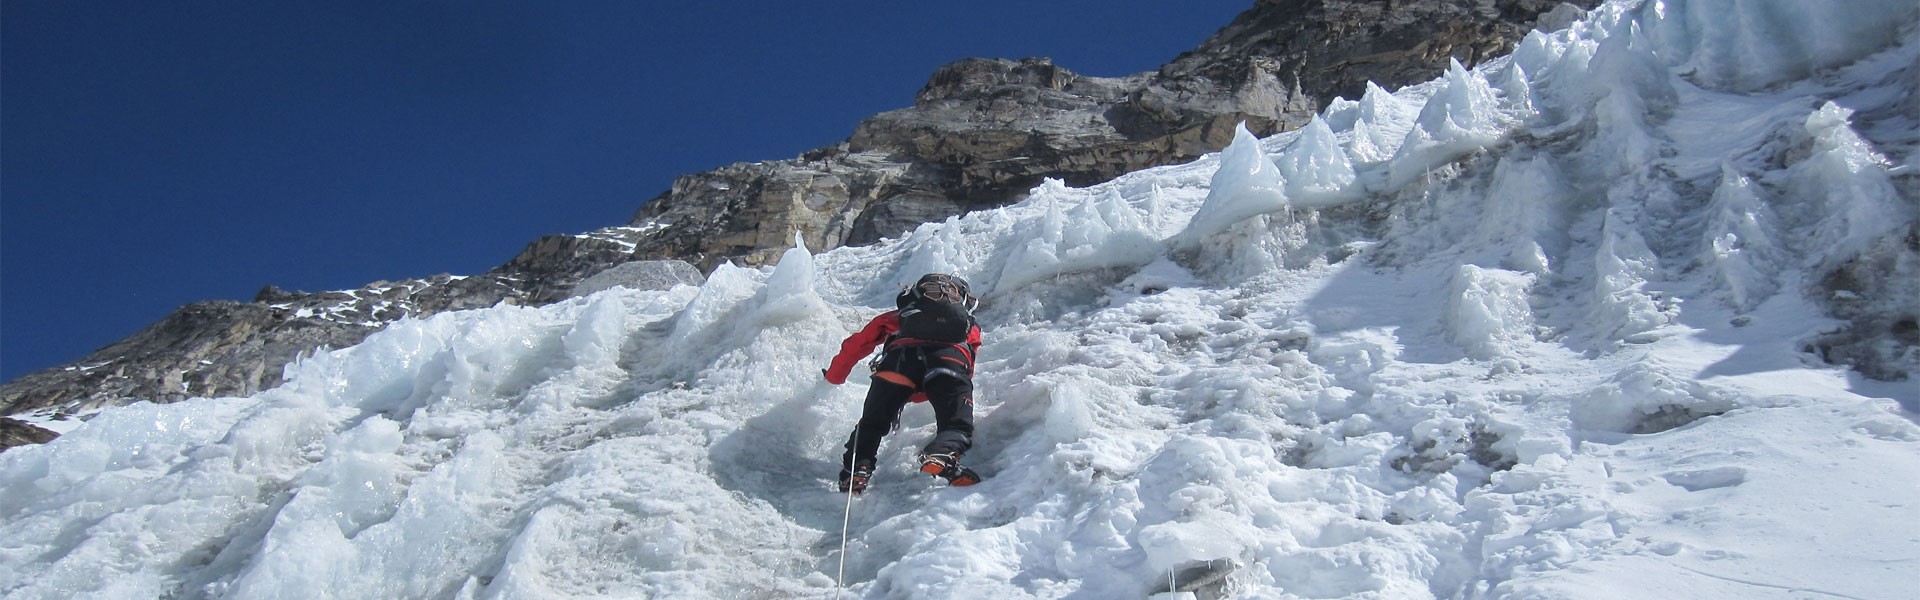 Trekking Peak Climbign iN nepal